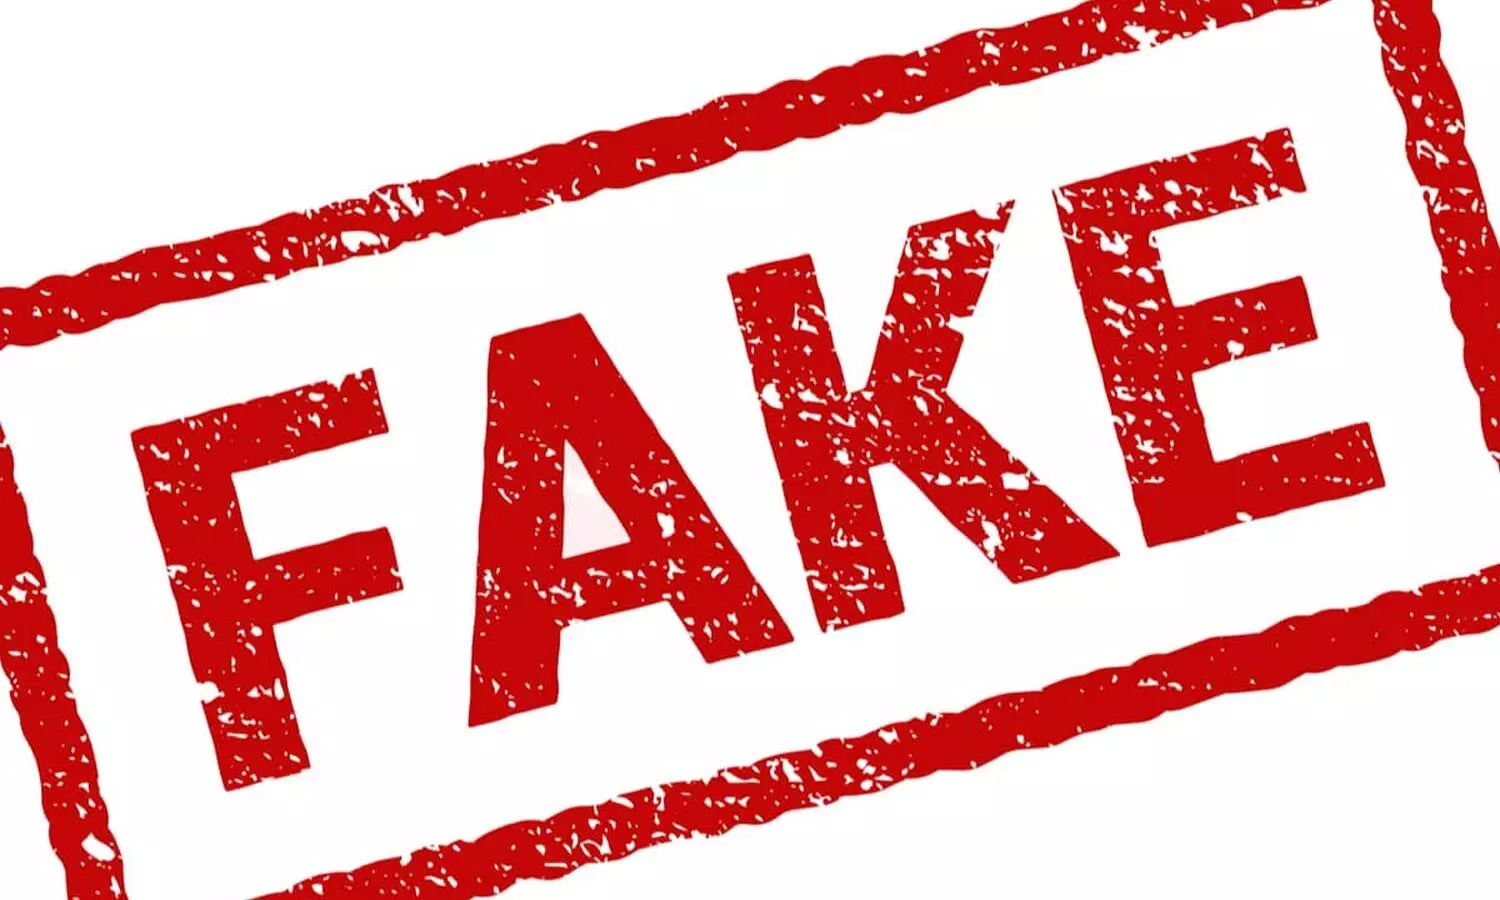 NEET 2020: NTA issues Alert on Fake notice circulating on social media, warns of action